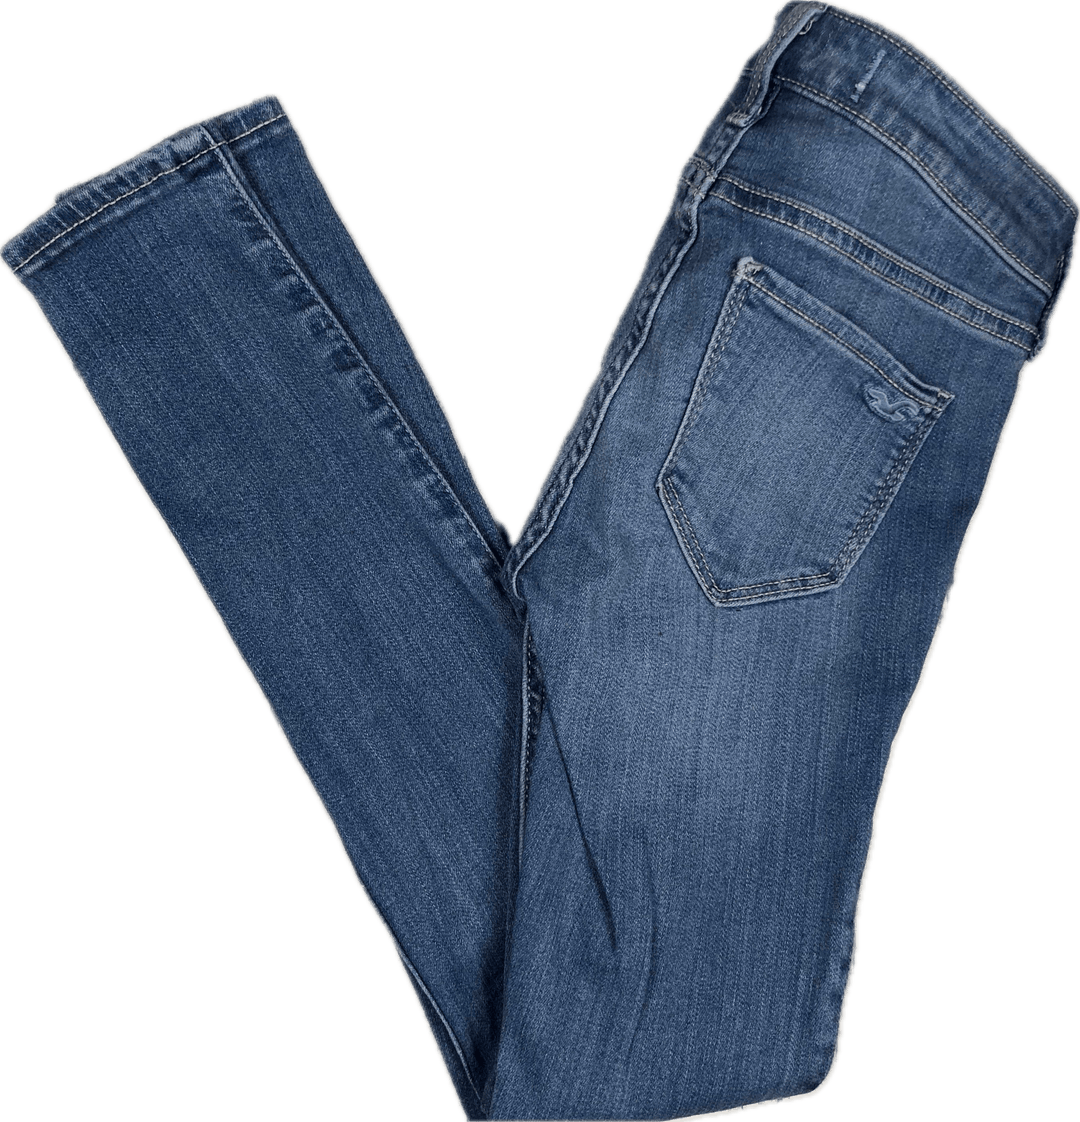 Hollister 'Low Rise Jean Jegging' Vintage Wash Jeans - Size 23/26 - Jean Pool